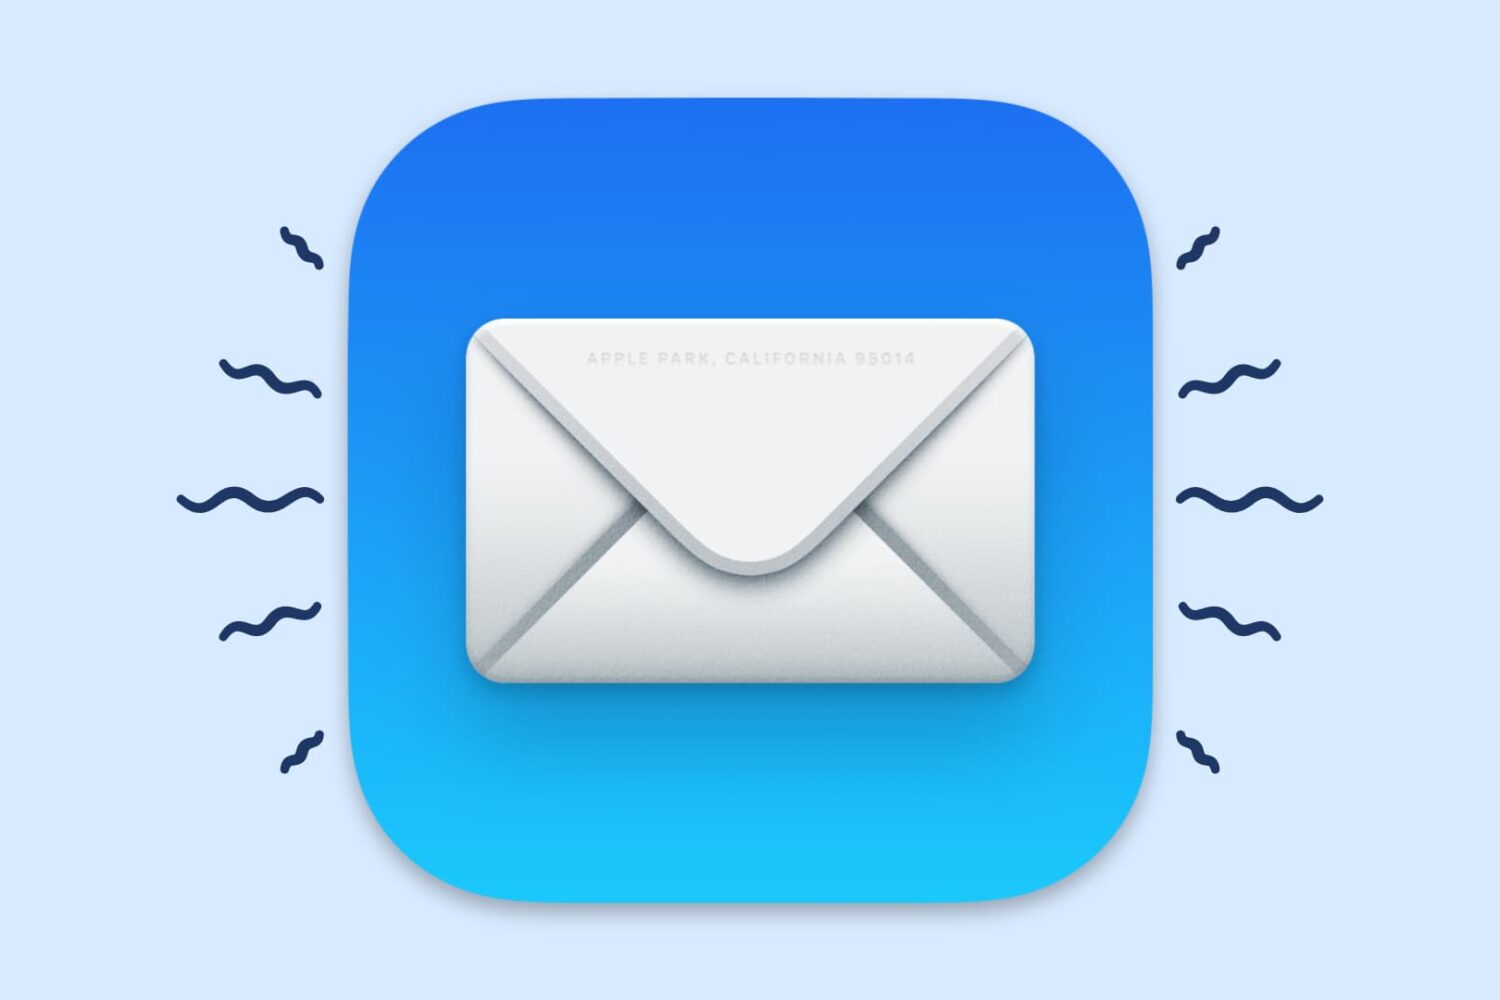 Apple Mail app icon with vibration symbol around it